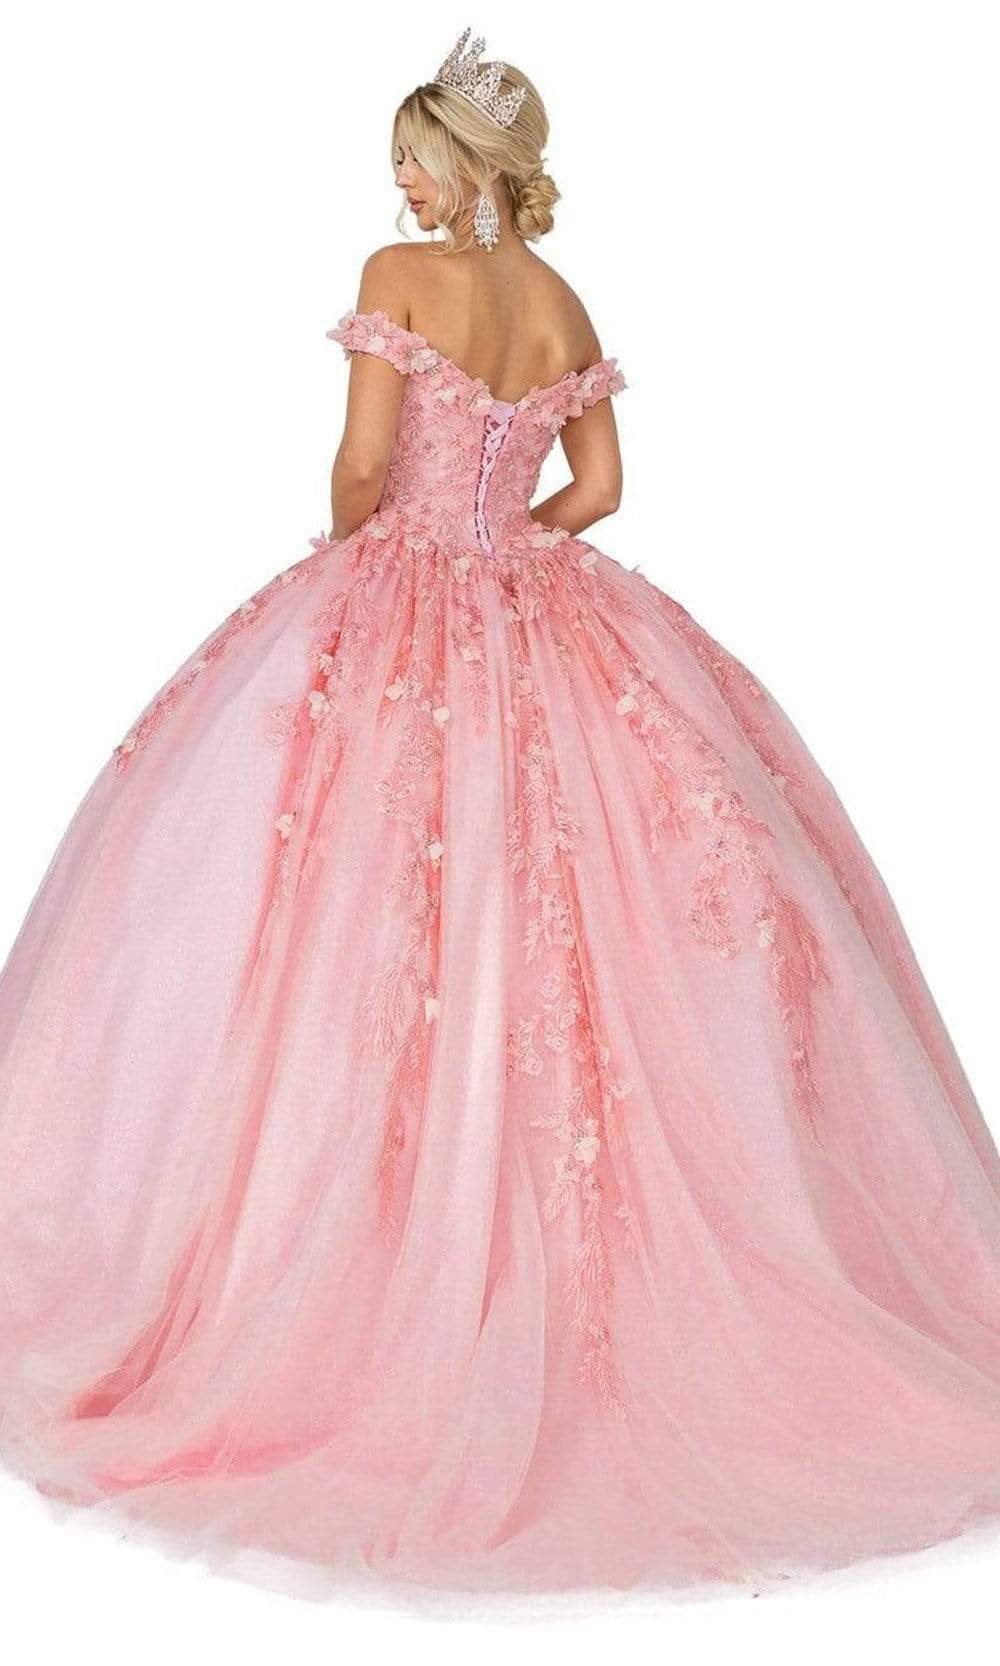 Dancing Queen - 1620 Off Shoulder Floral Ballgown Special Occasion Dress